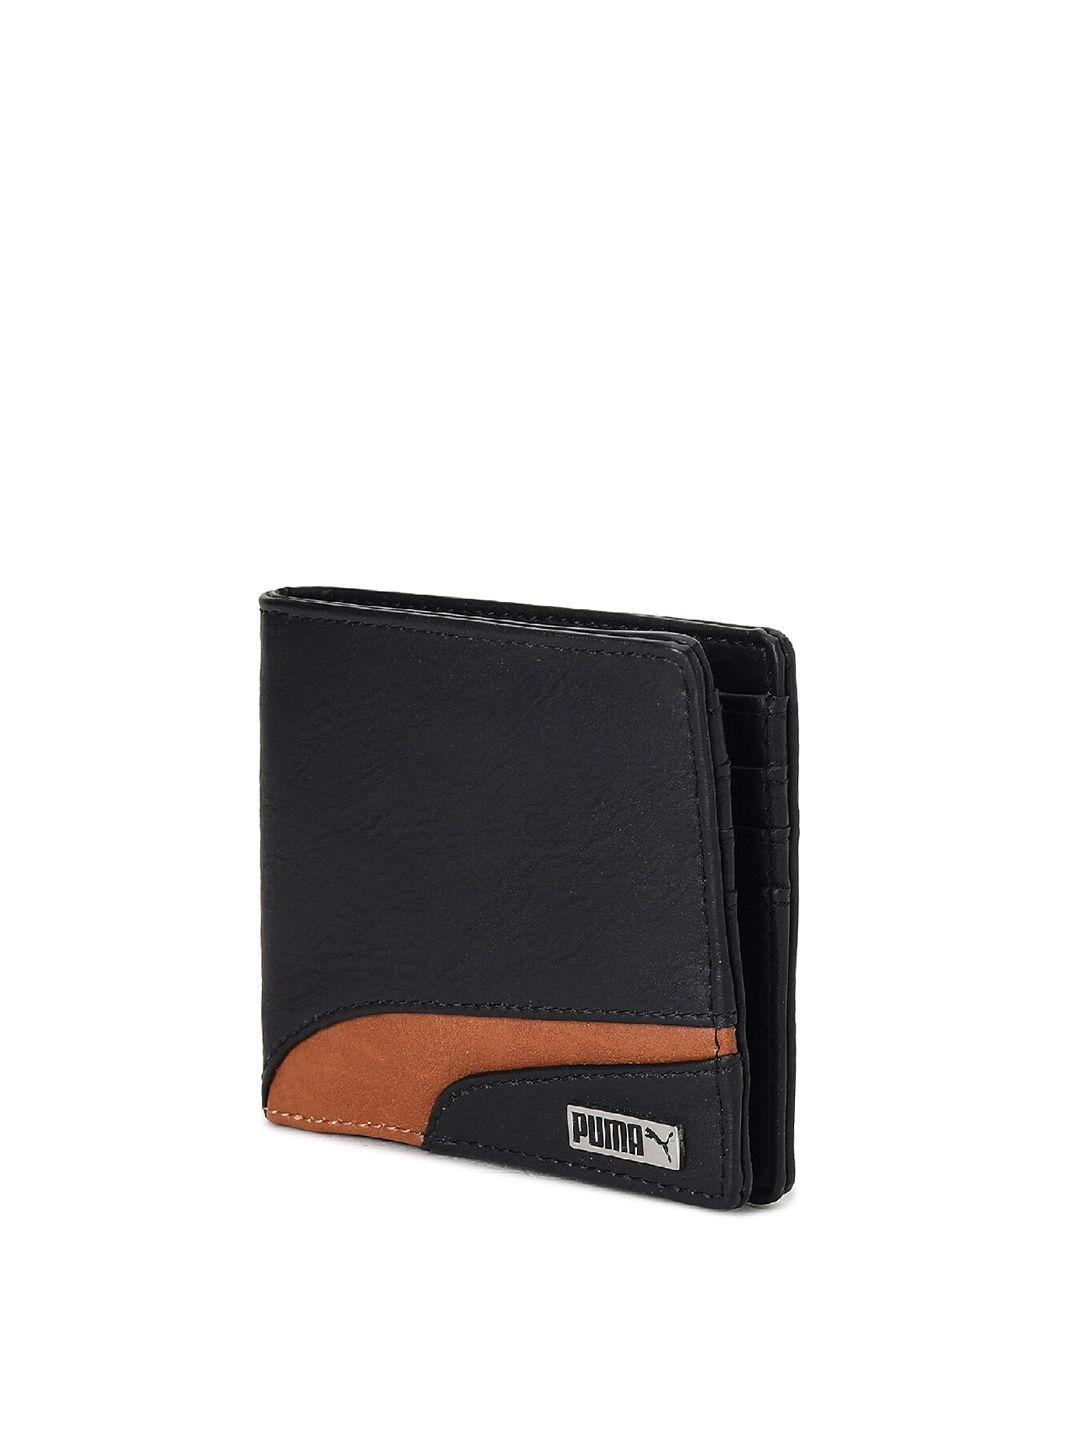 puma-men-black-two-fold-wallet